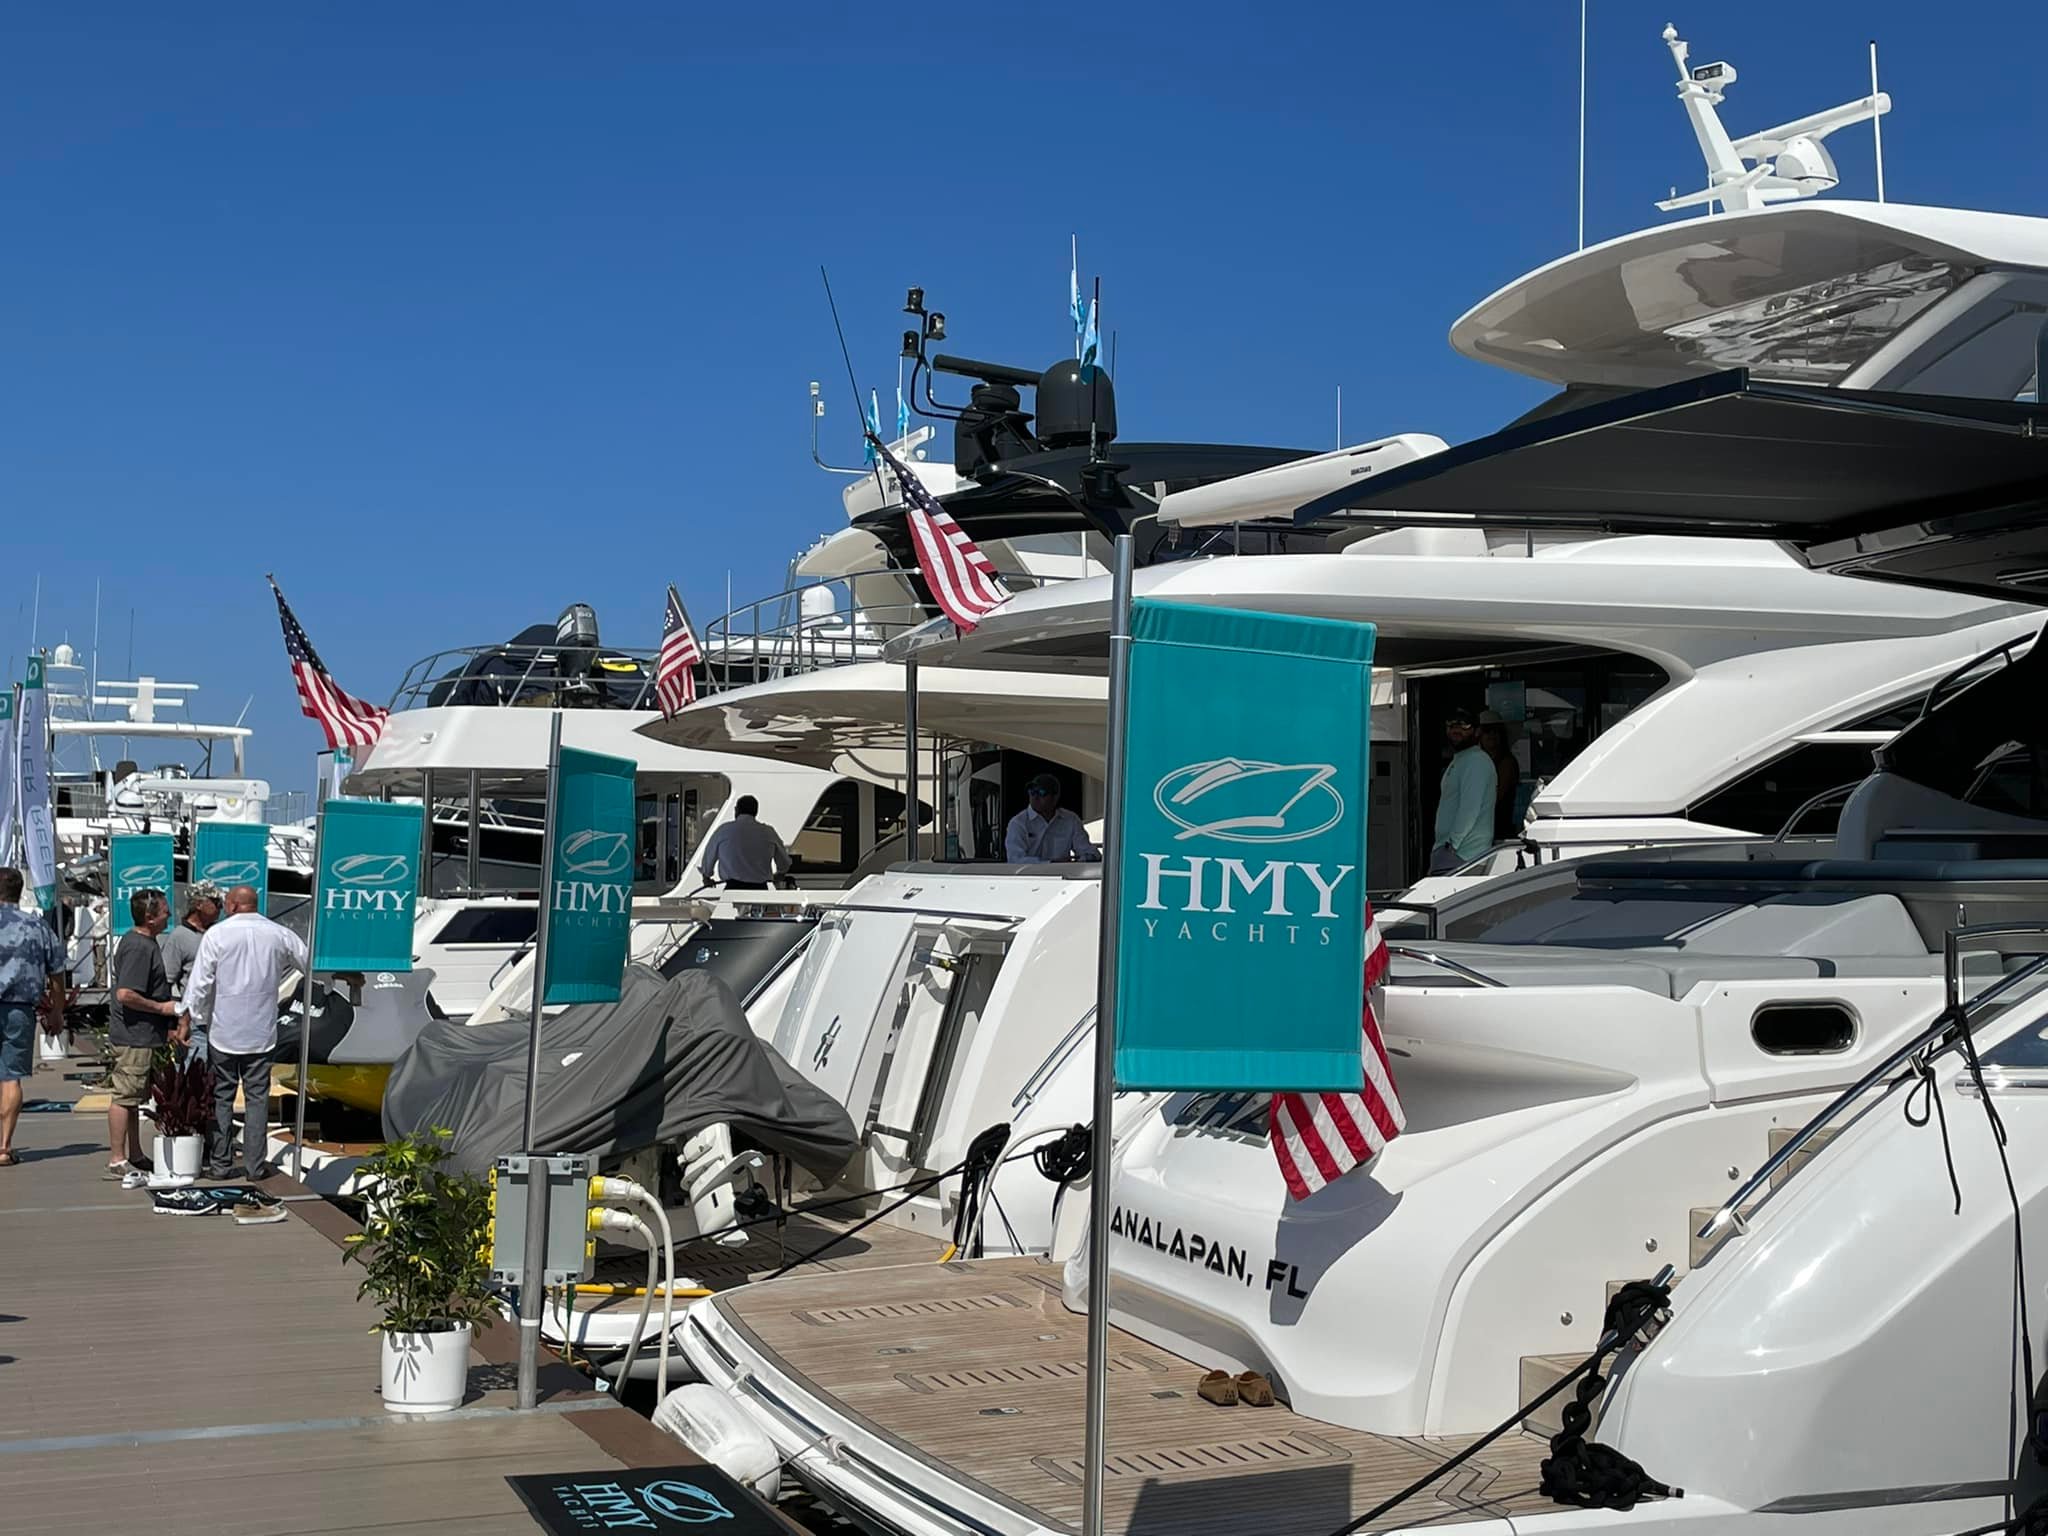 Motor Yachts on display at a boat show